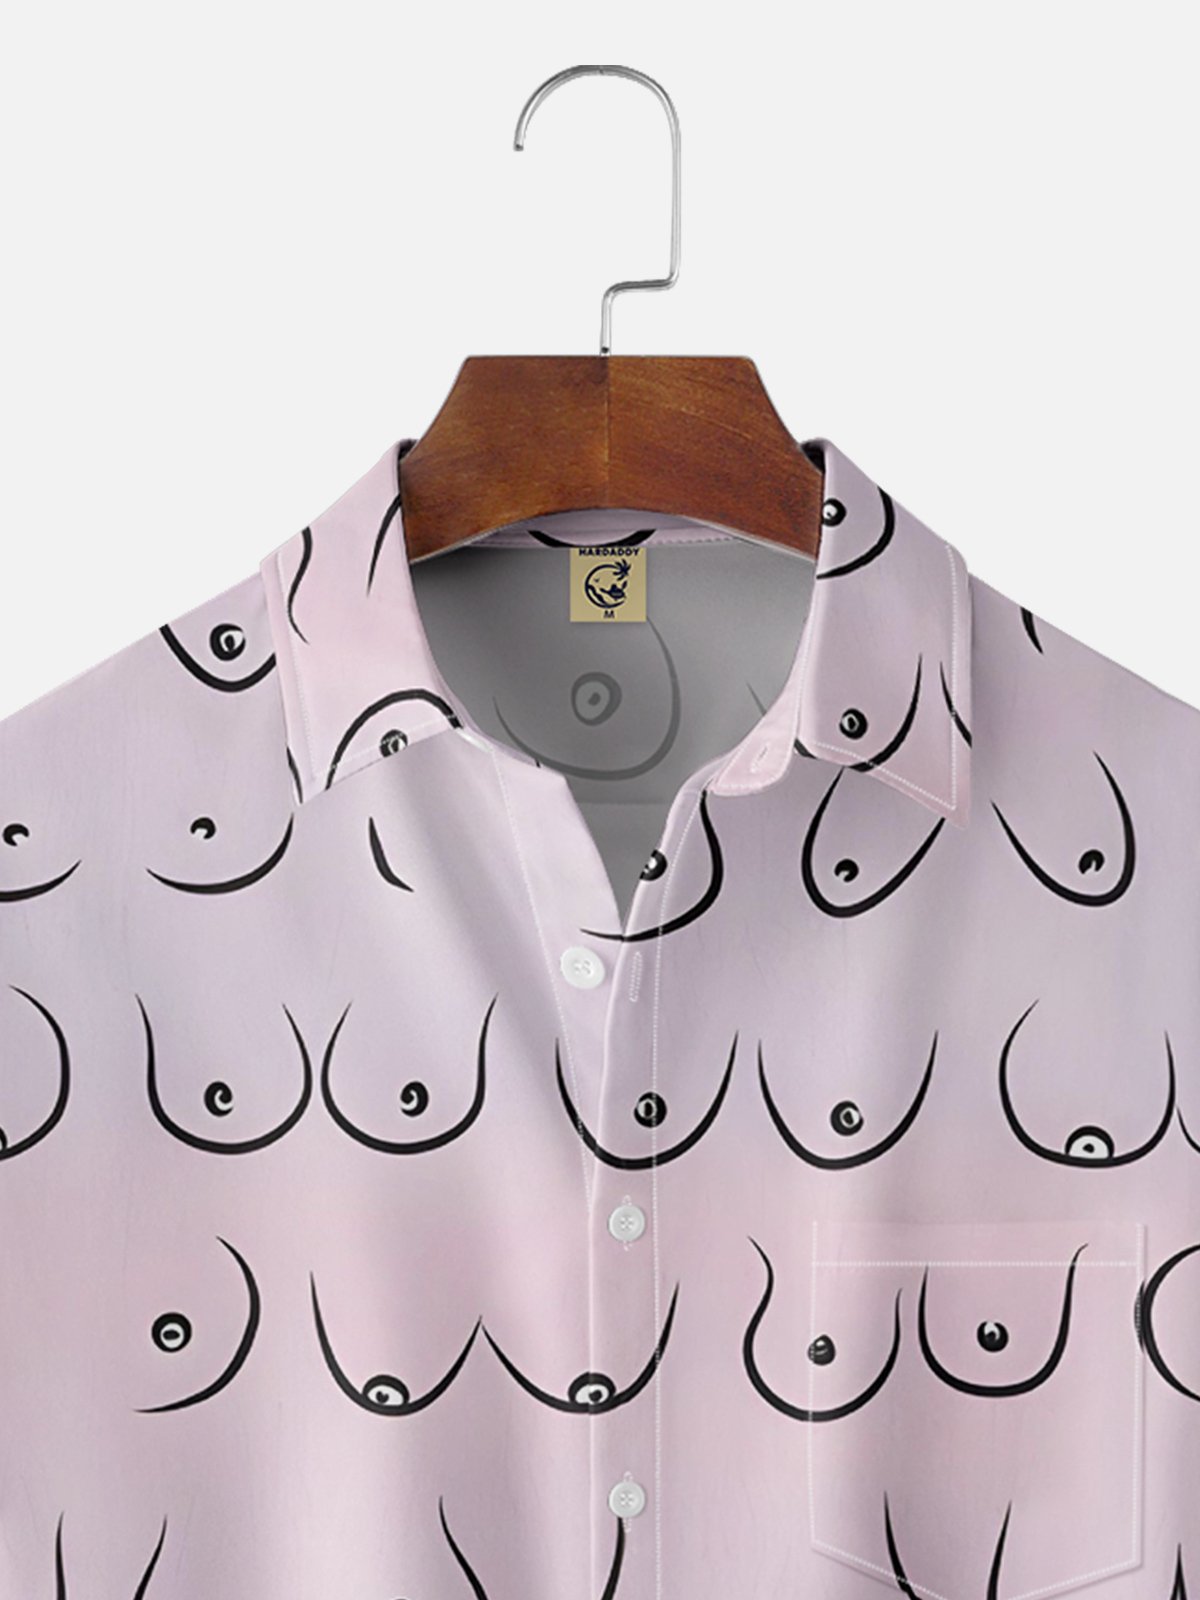 Hardaddy Moisture-wicking Abstract Line Drawing Chest Pocket Hawaiian Shirt